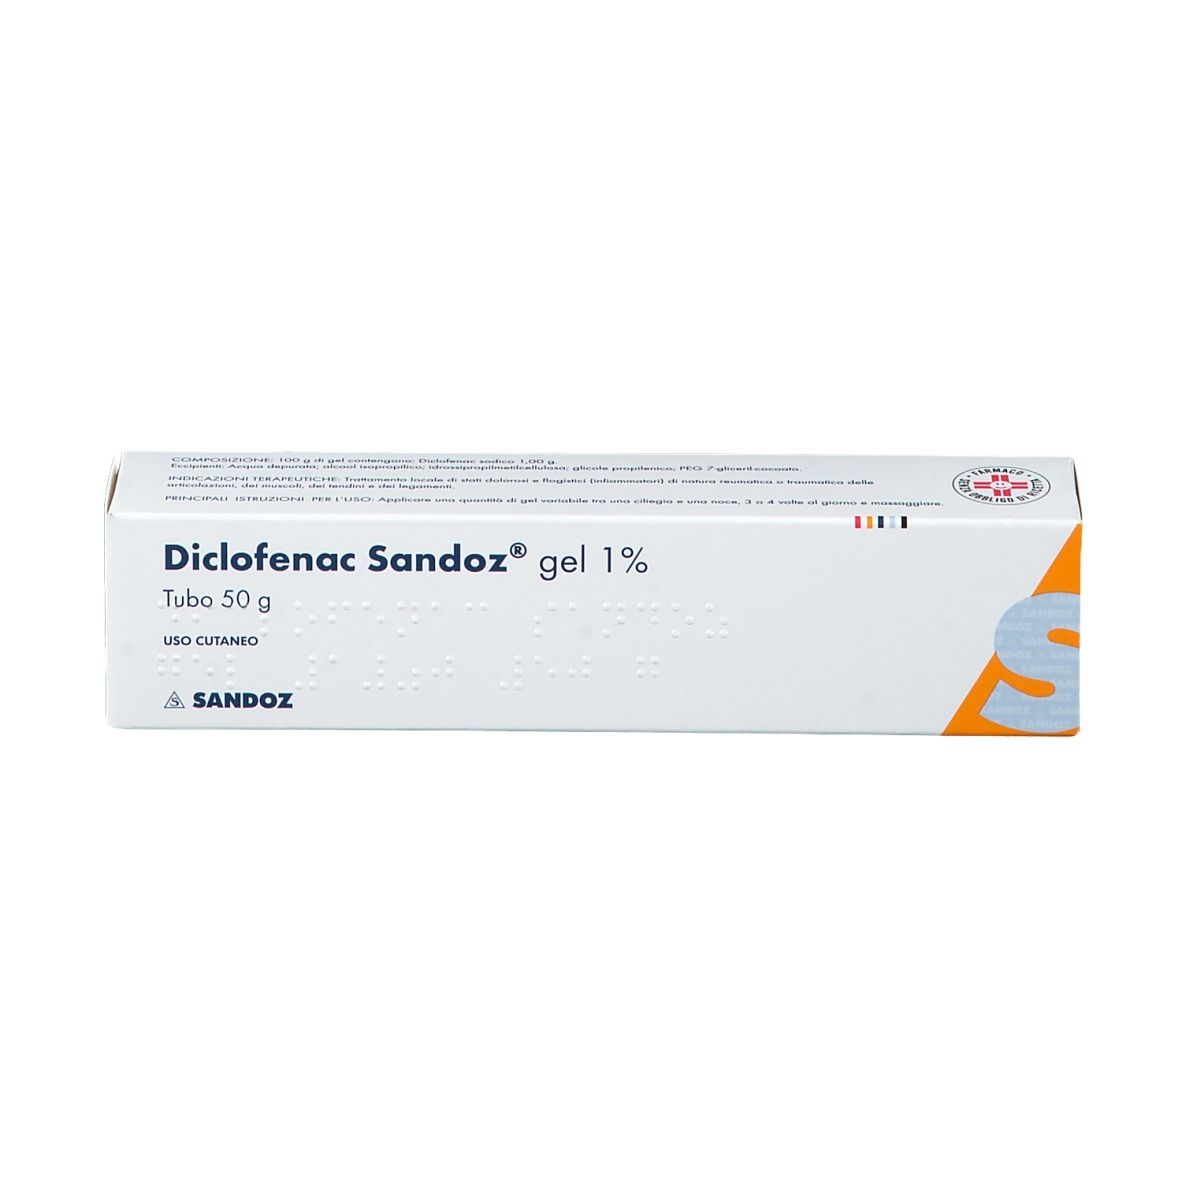 Diclofenac Sandoz® gel 1%